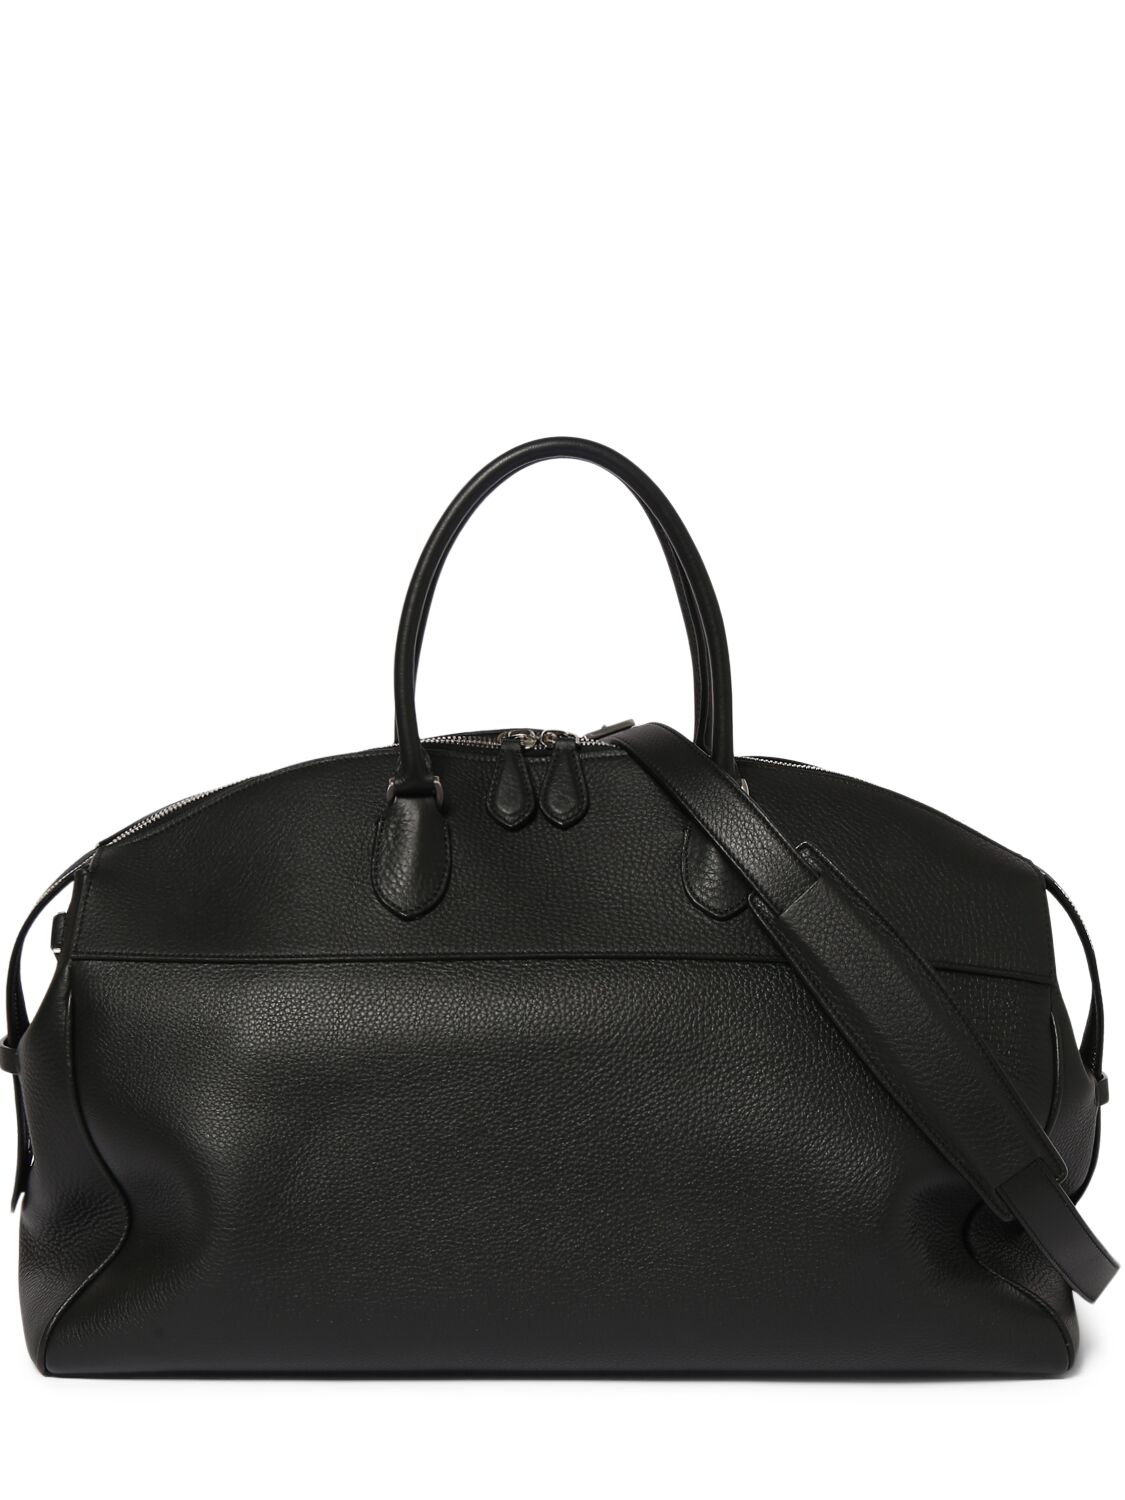 George Leather Duffle Bag